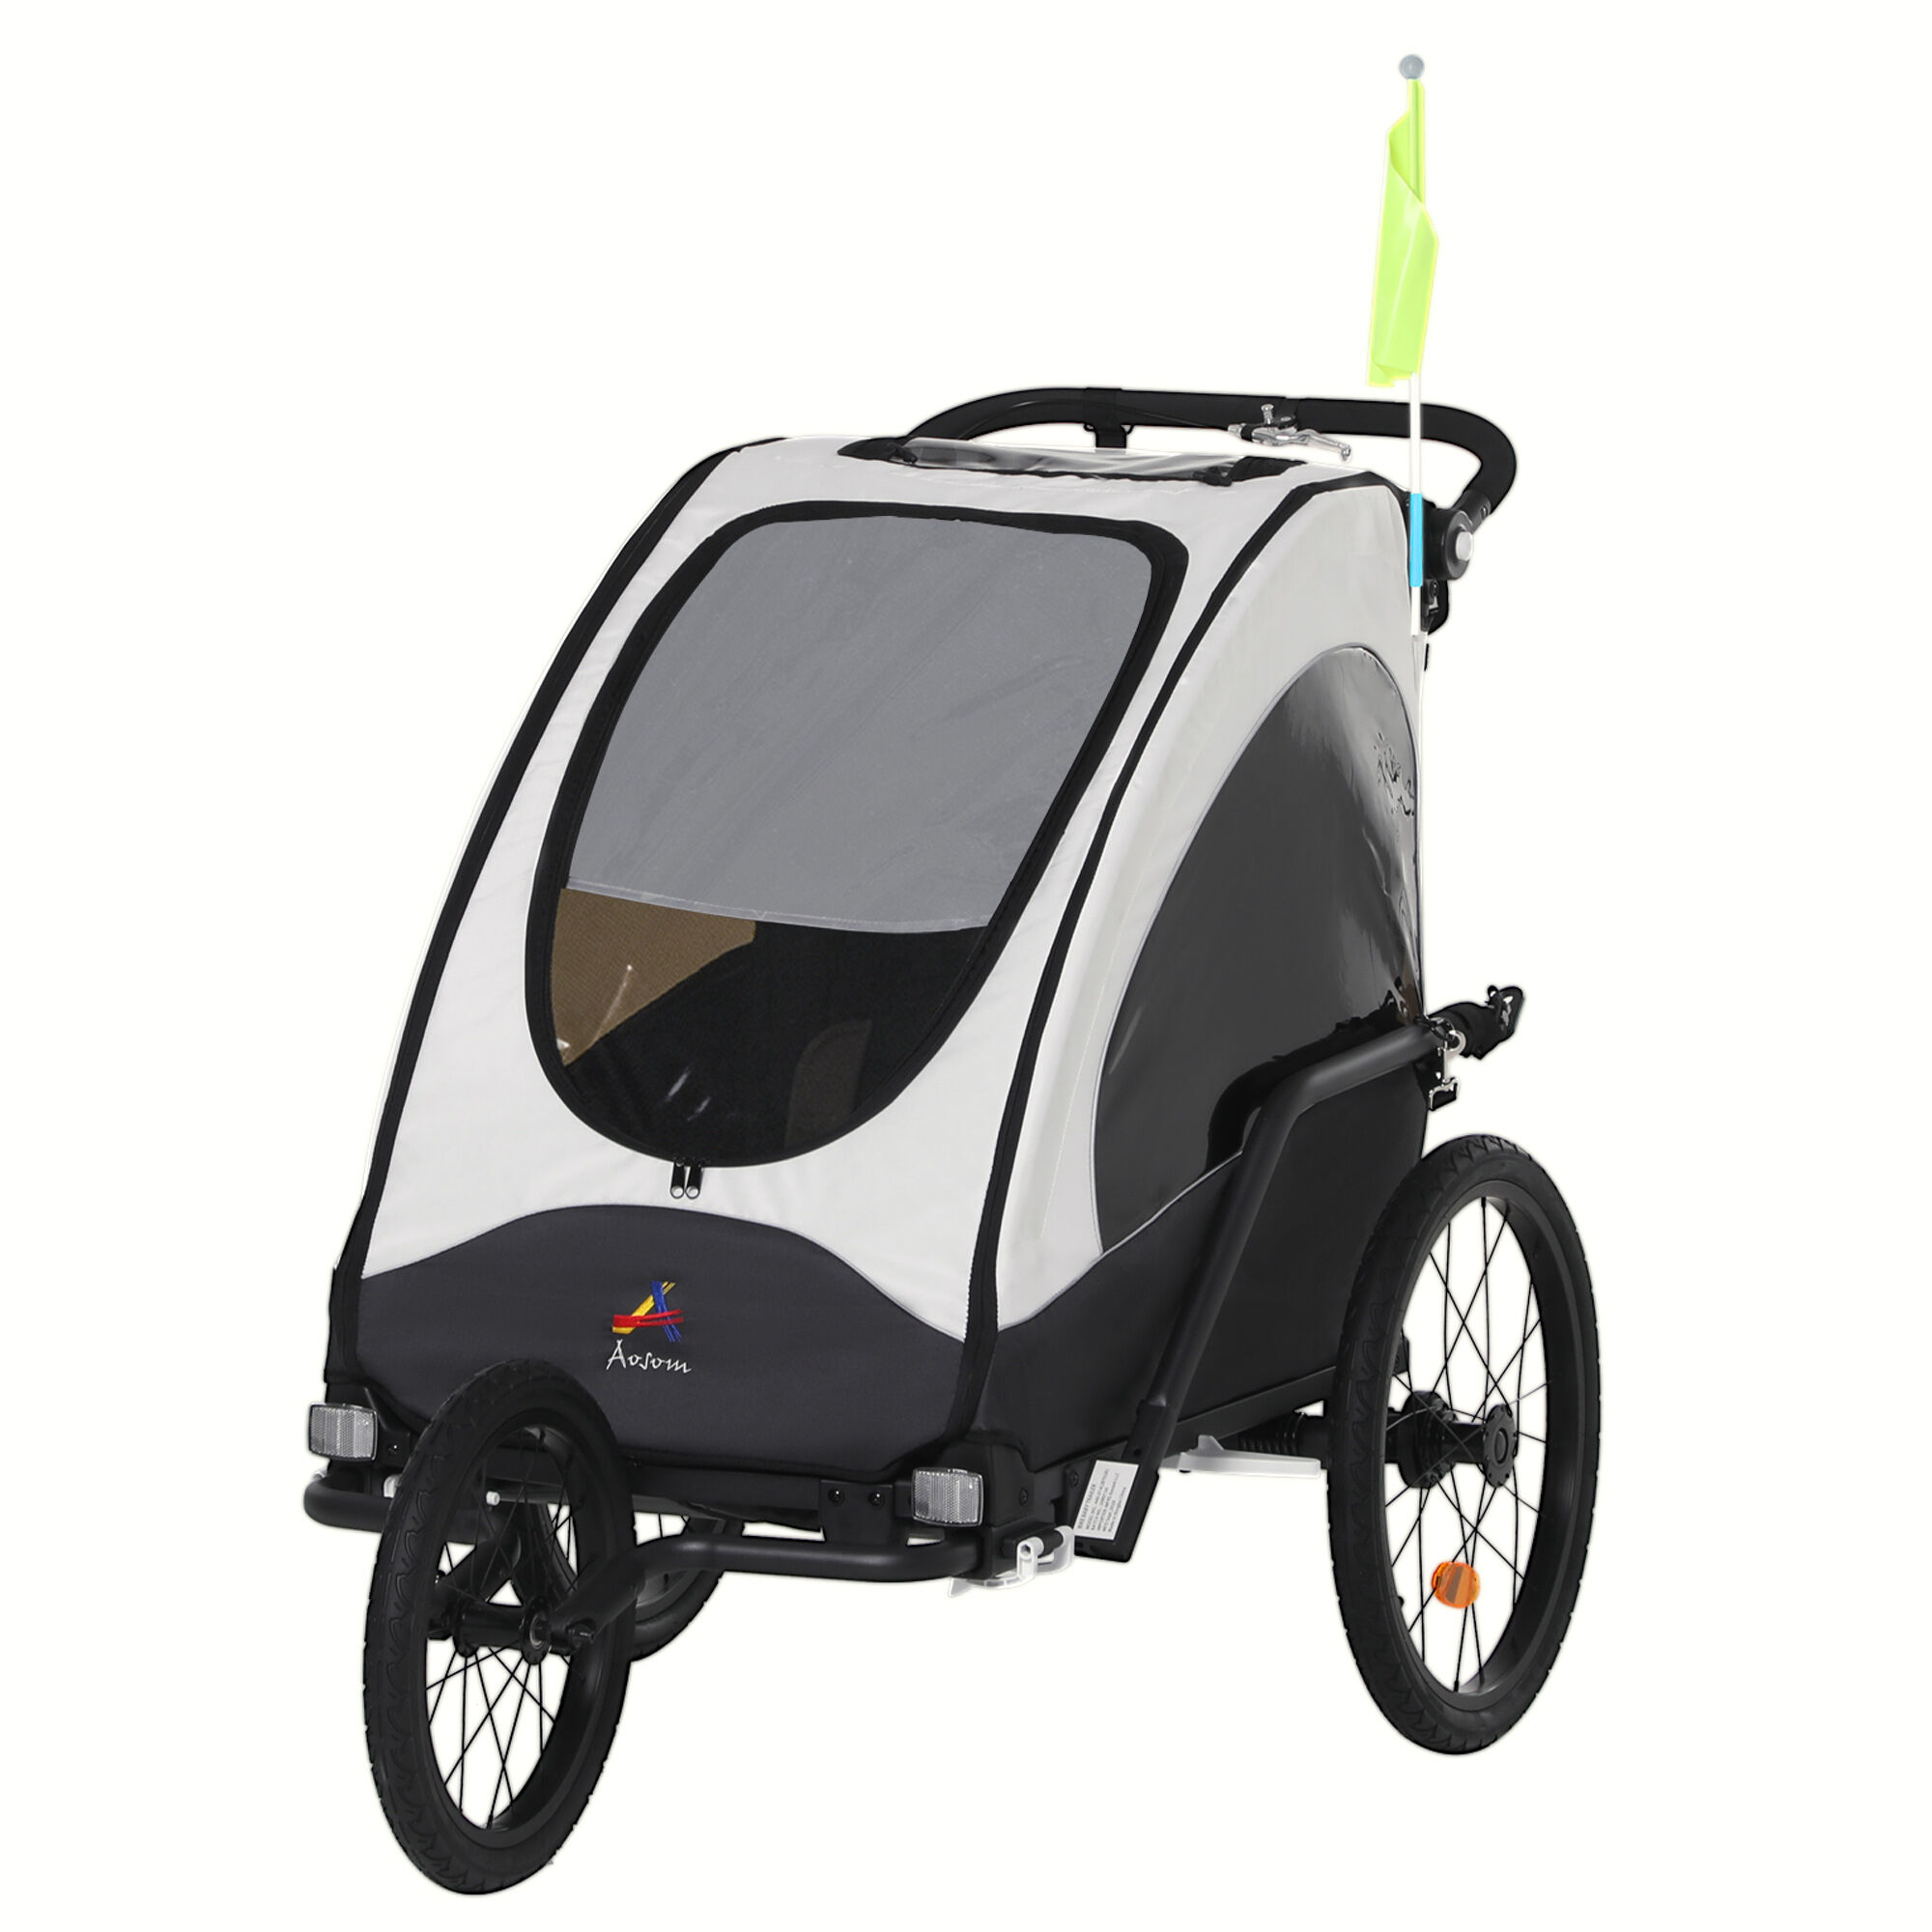 Aosom Child Bike Trailer 3 In1 Foldable Baby Trailer Transport Carrier with Shock Absorber System Rubber Tires Adjustable Handlebar